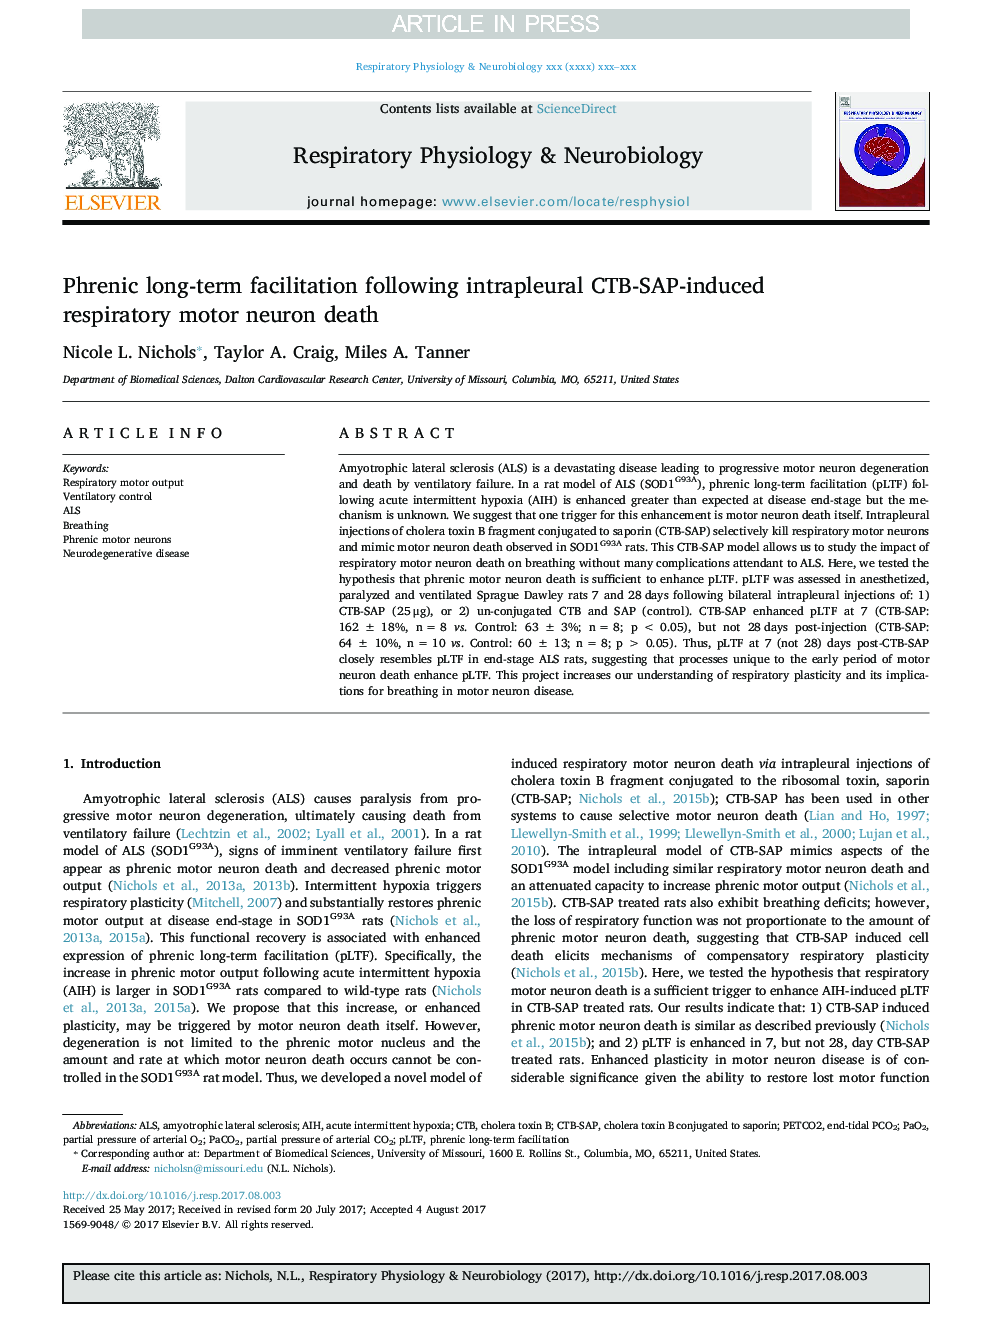 Phrenic long-term facilitation following intrapleural CTB-SAP-induced respiratory motor neuron death